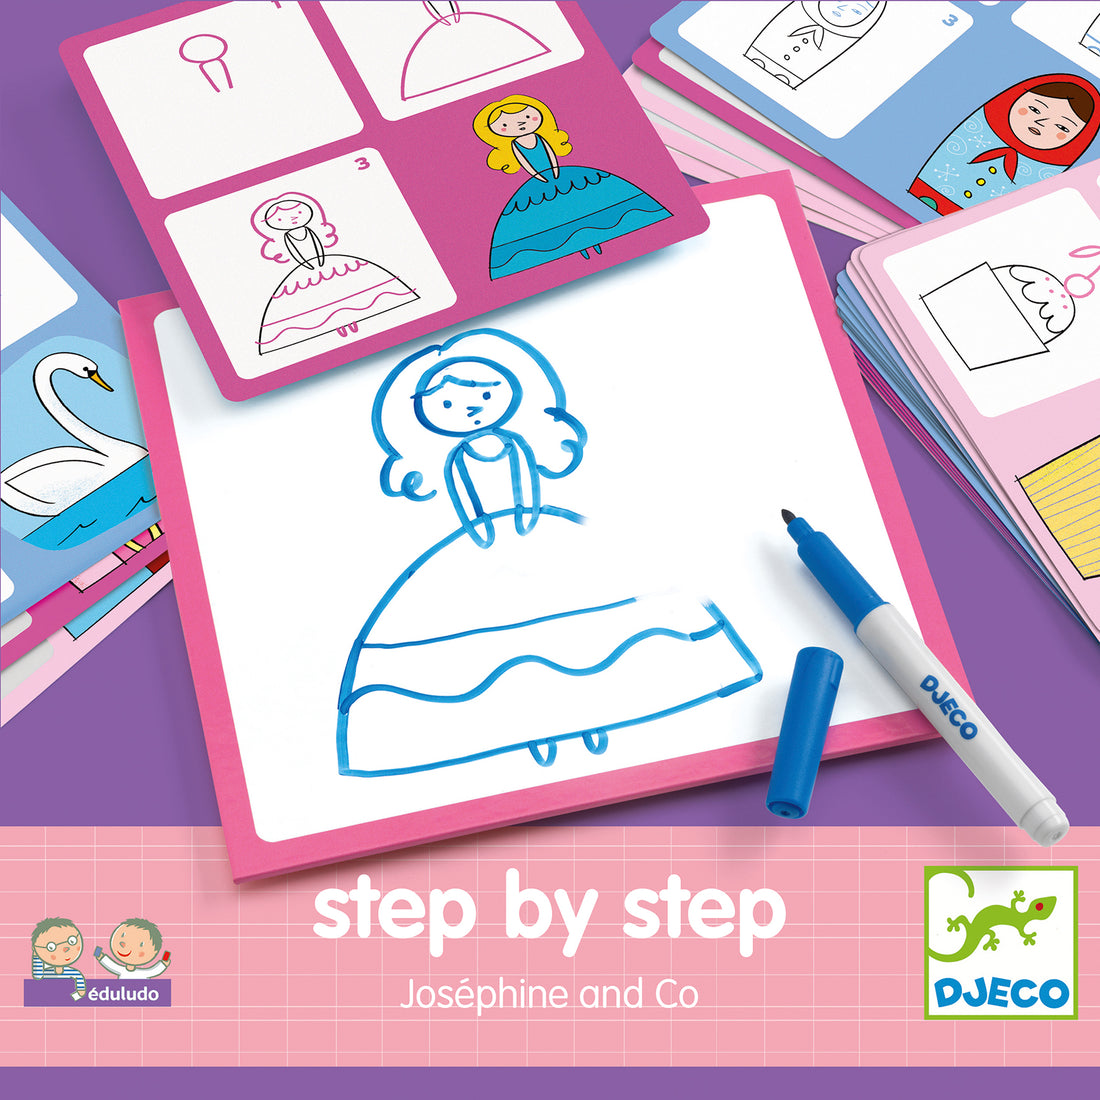 Djeco - step by step - josephine & co